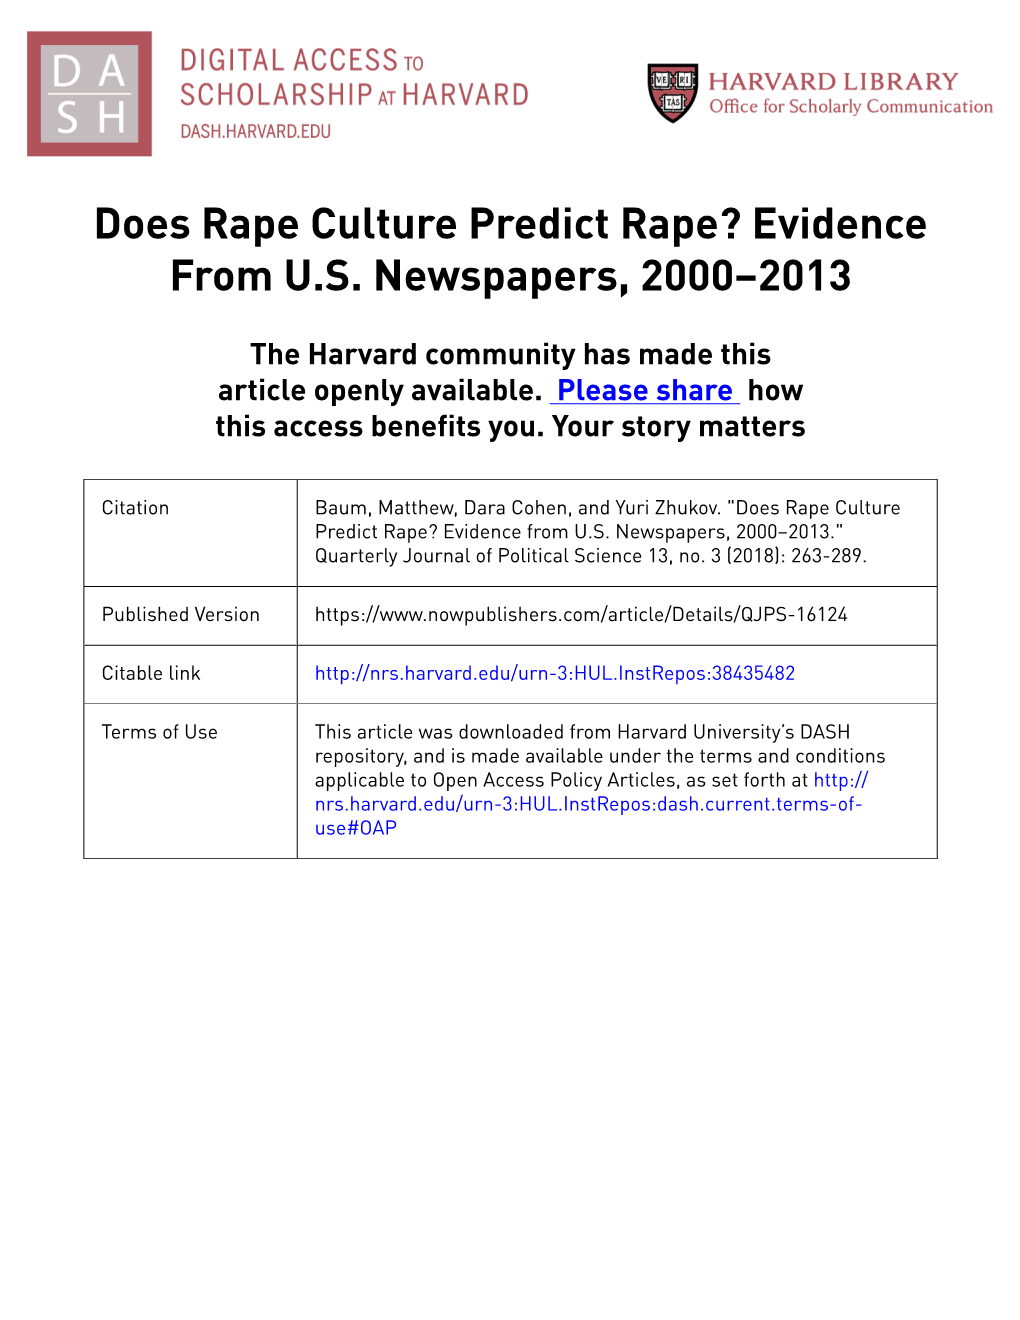 Rape Culture and Sexual Crime